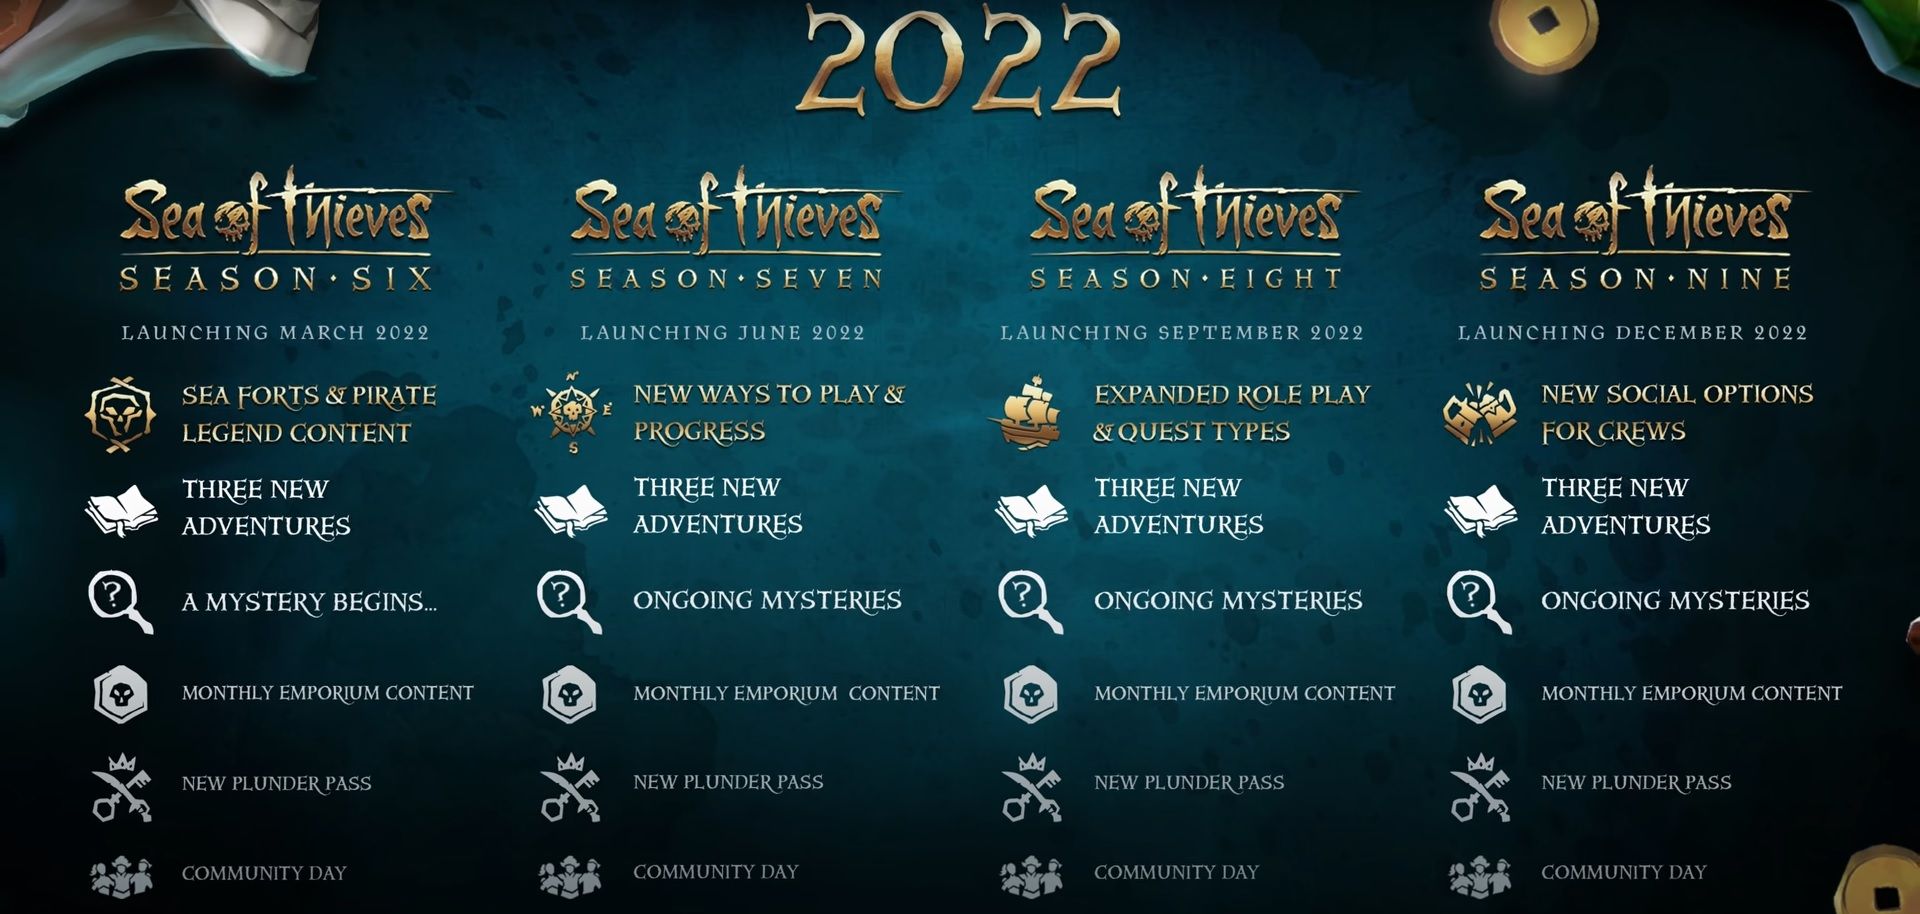 sea of thieves 2022 roadmap